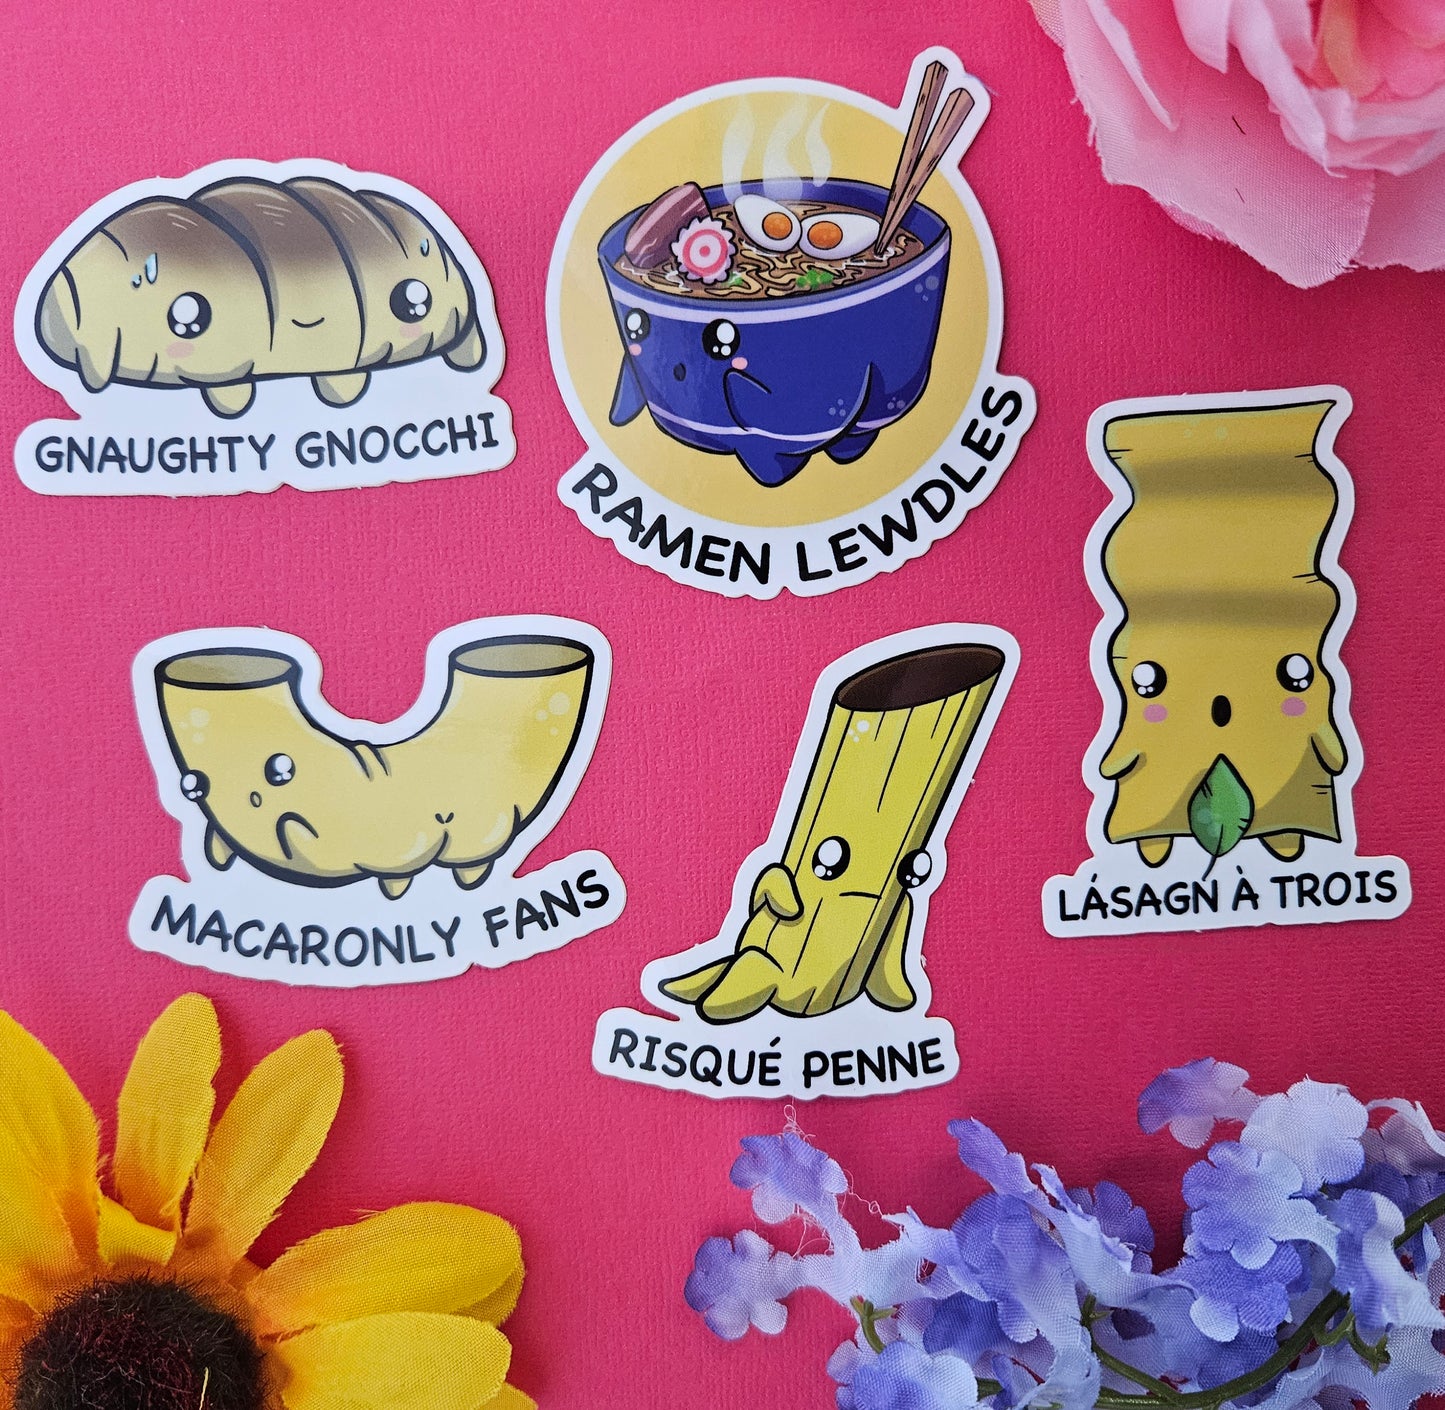 Gnaughty Gnocchi Sticker